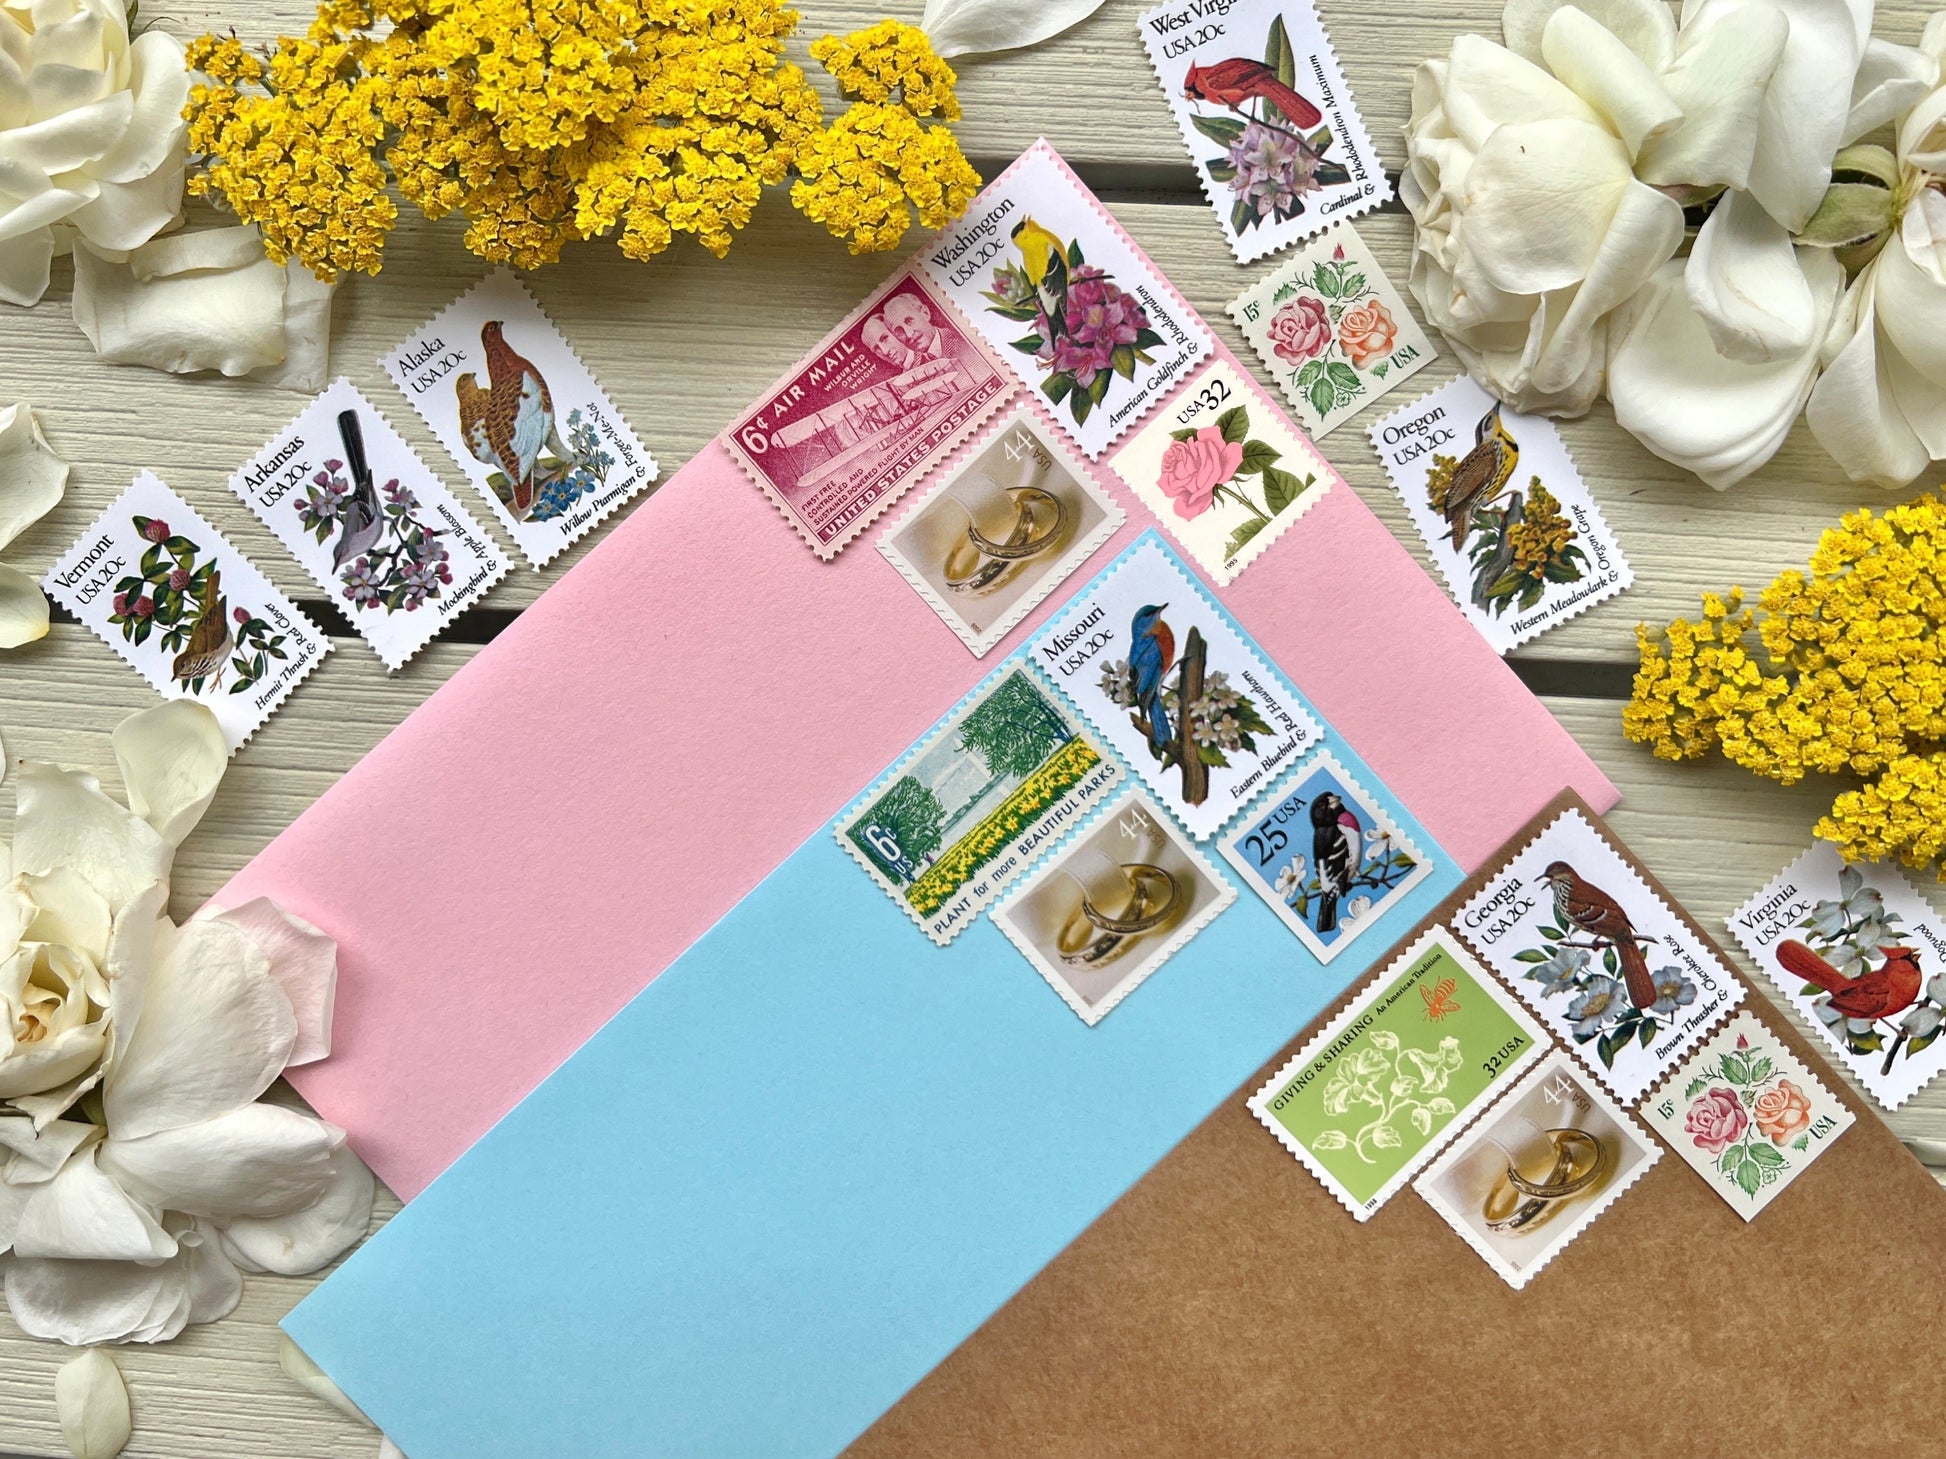 Five 32c Aster Flower stamps | Vintage Unused Postage Stamp | Pack of 5  stamps | Wedding Invitation Postage | Popular Wedding Flowers